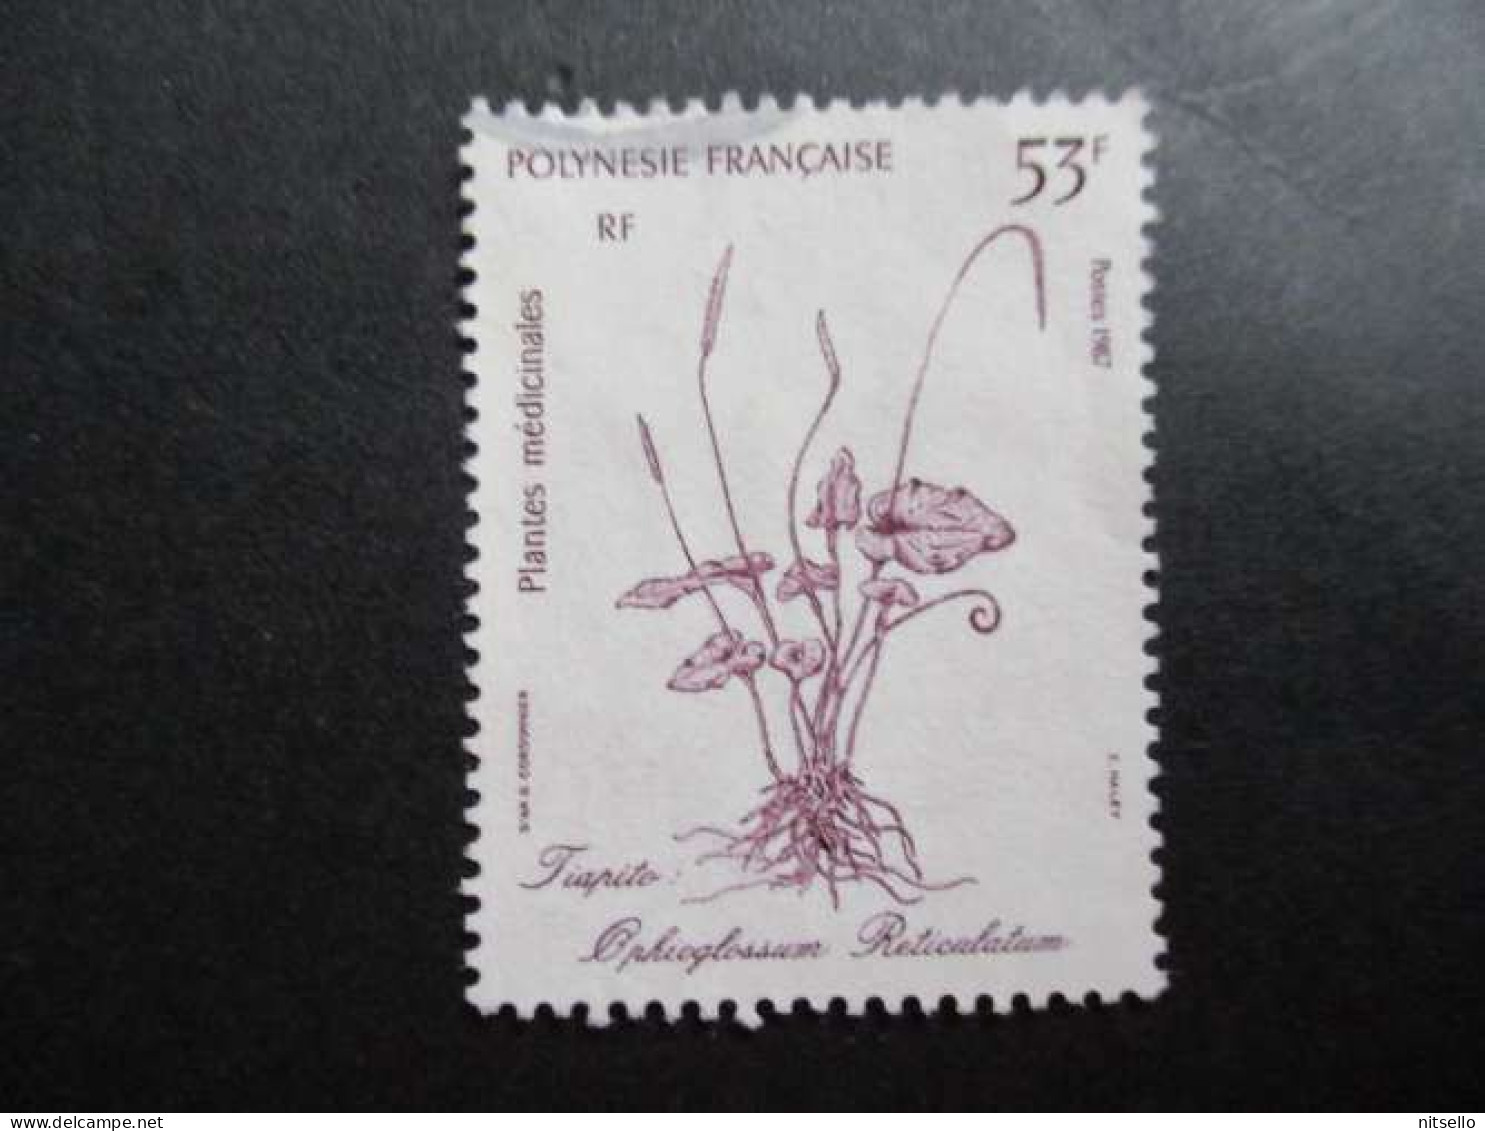 LOTE 2202A ///  (C020)  POLINESIA FRANCESA  - YVERT Nº:  286 OBL 1987     ¡¡¡ OFERTA - LIQUIDATION - JE LIQUIDE !!! - Used Stamps